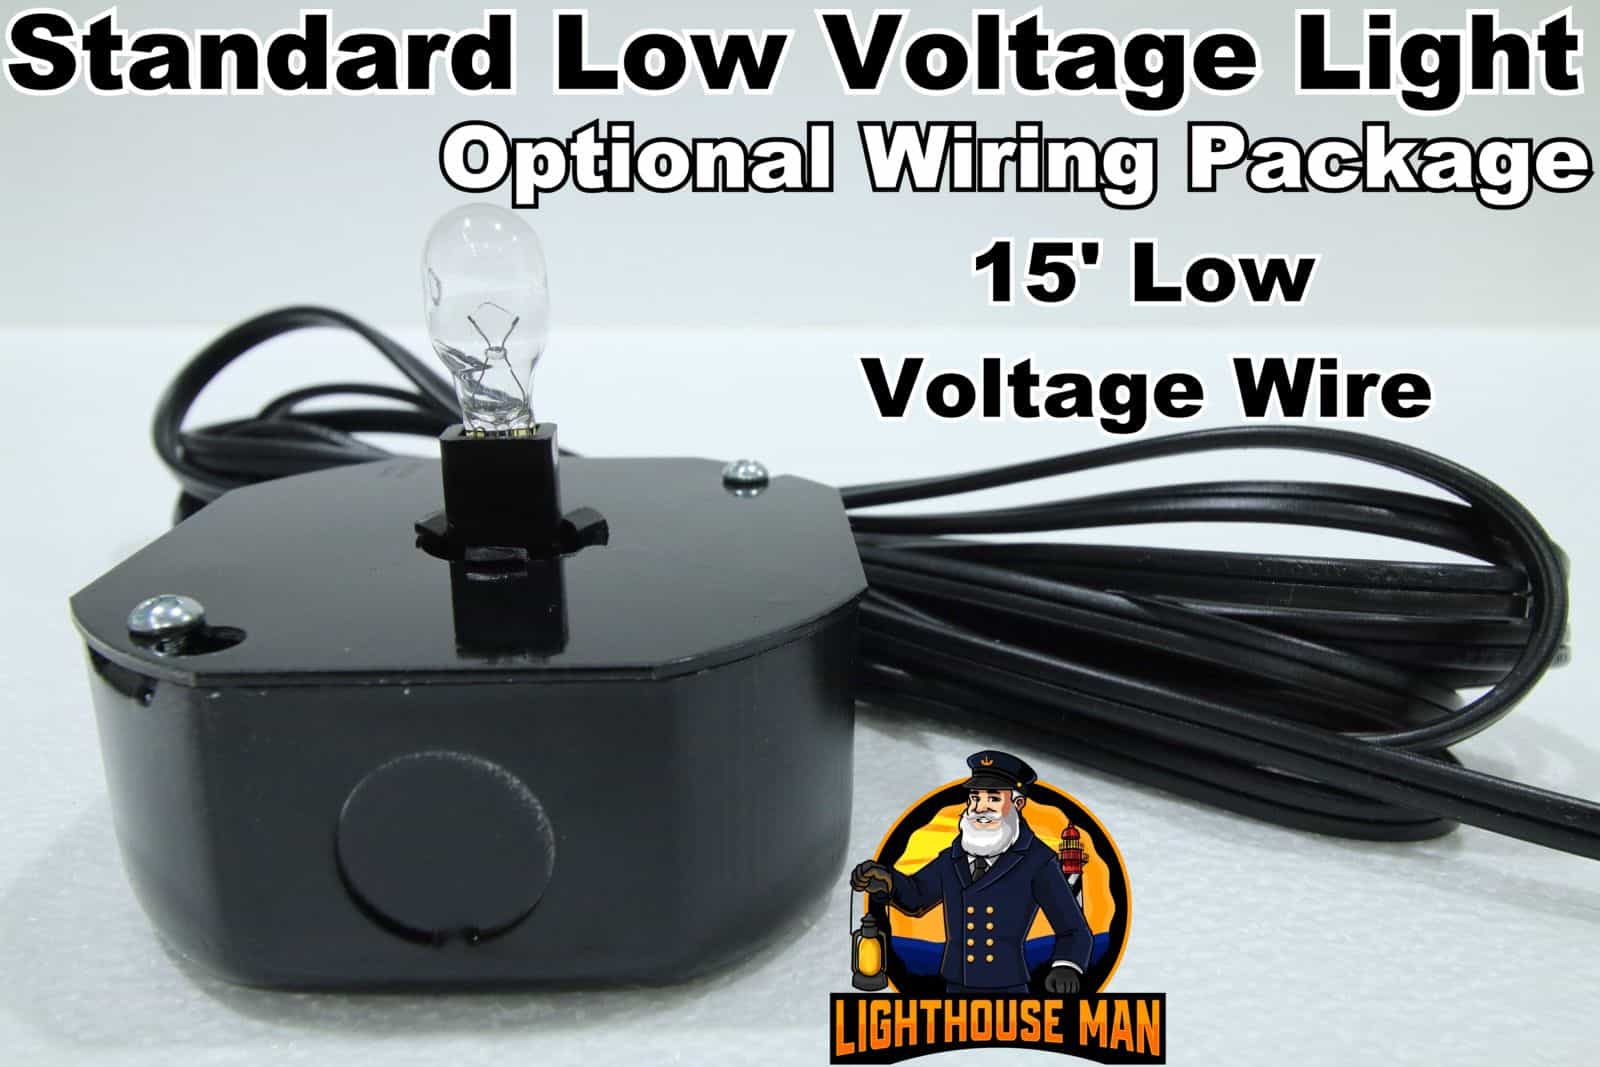 Standard Low Voltage Wiring Package 